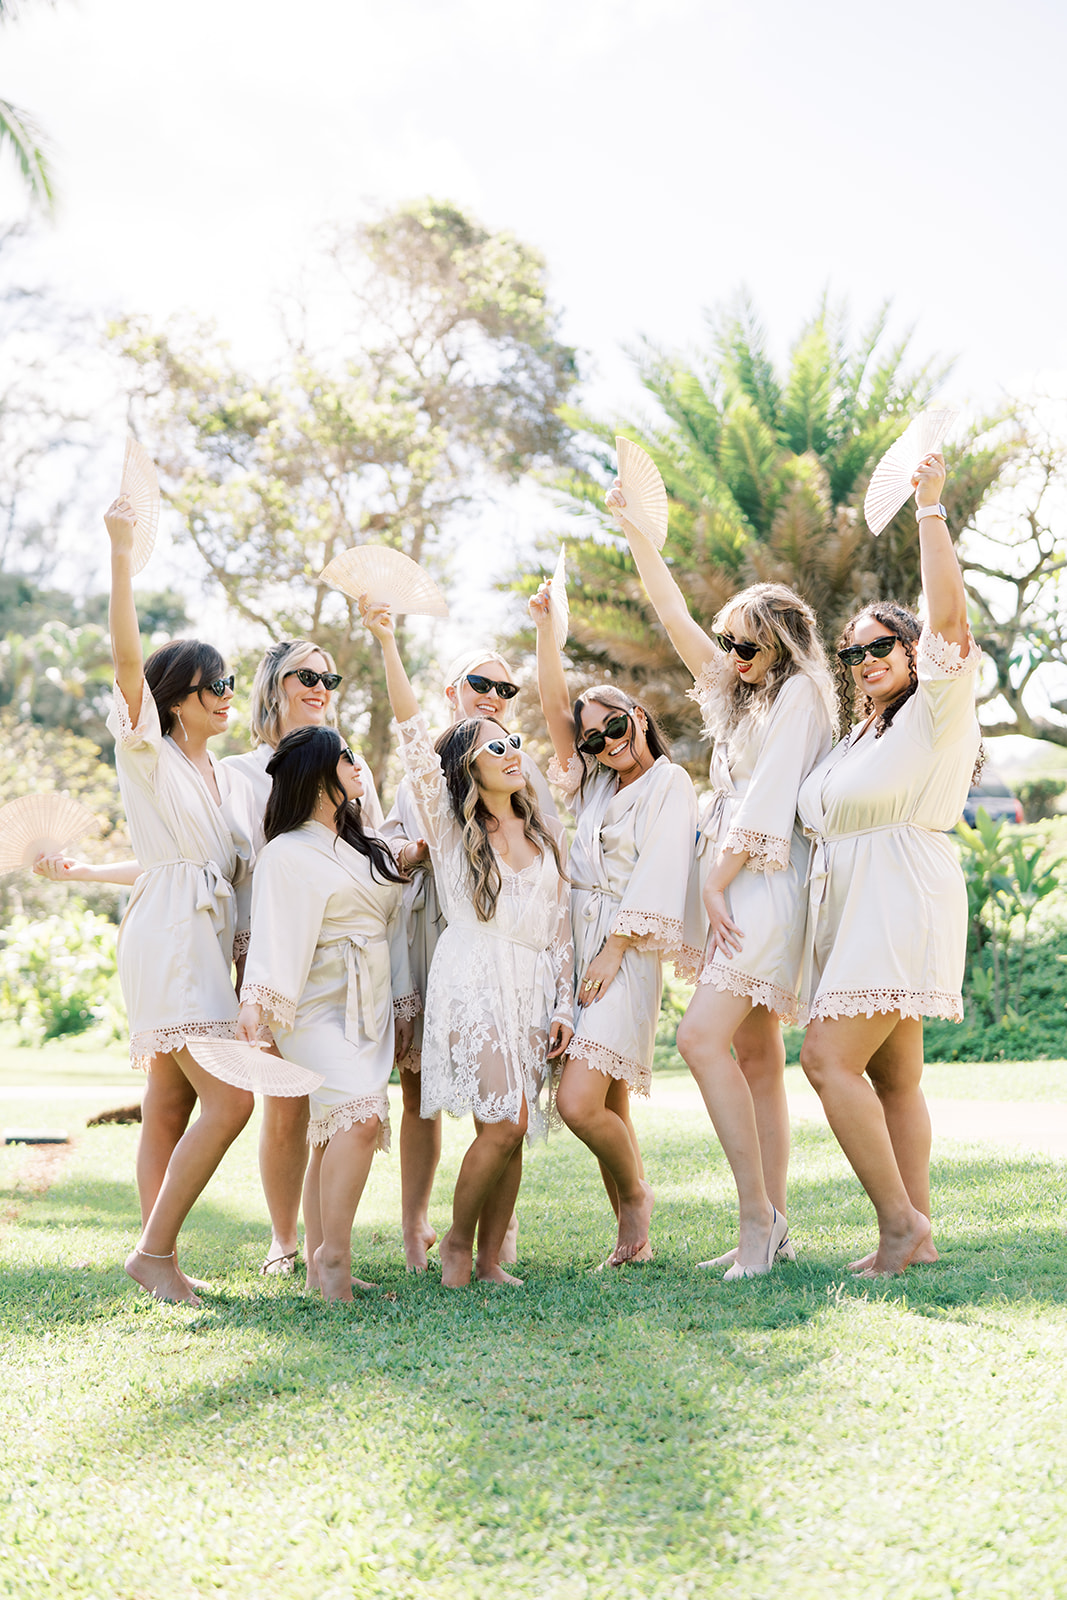 A group of women dressed in white celebrating joyfully outdoors captured by Megan Moura Wedding Photographer